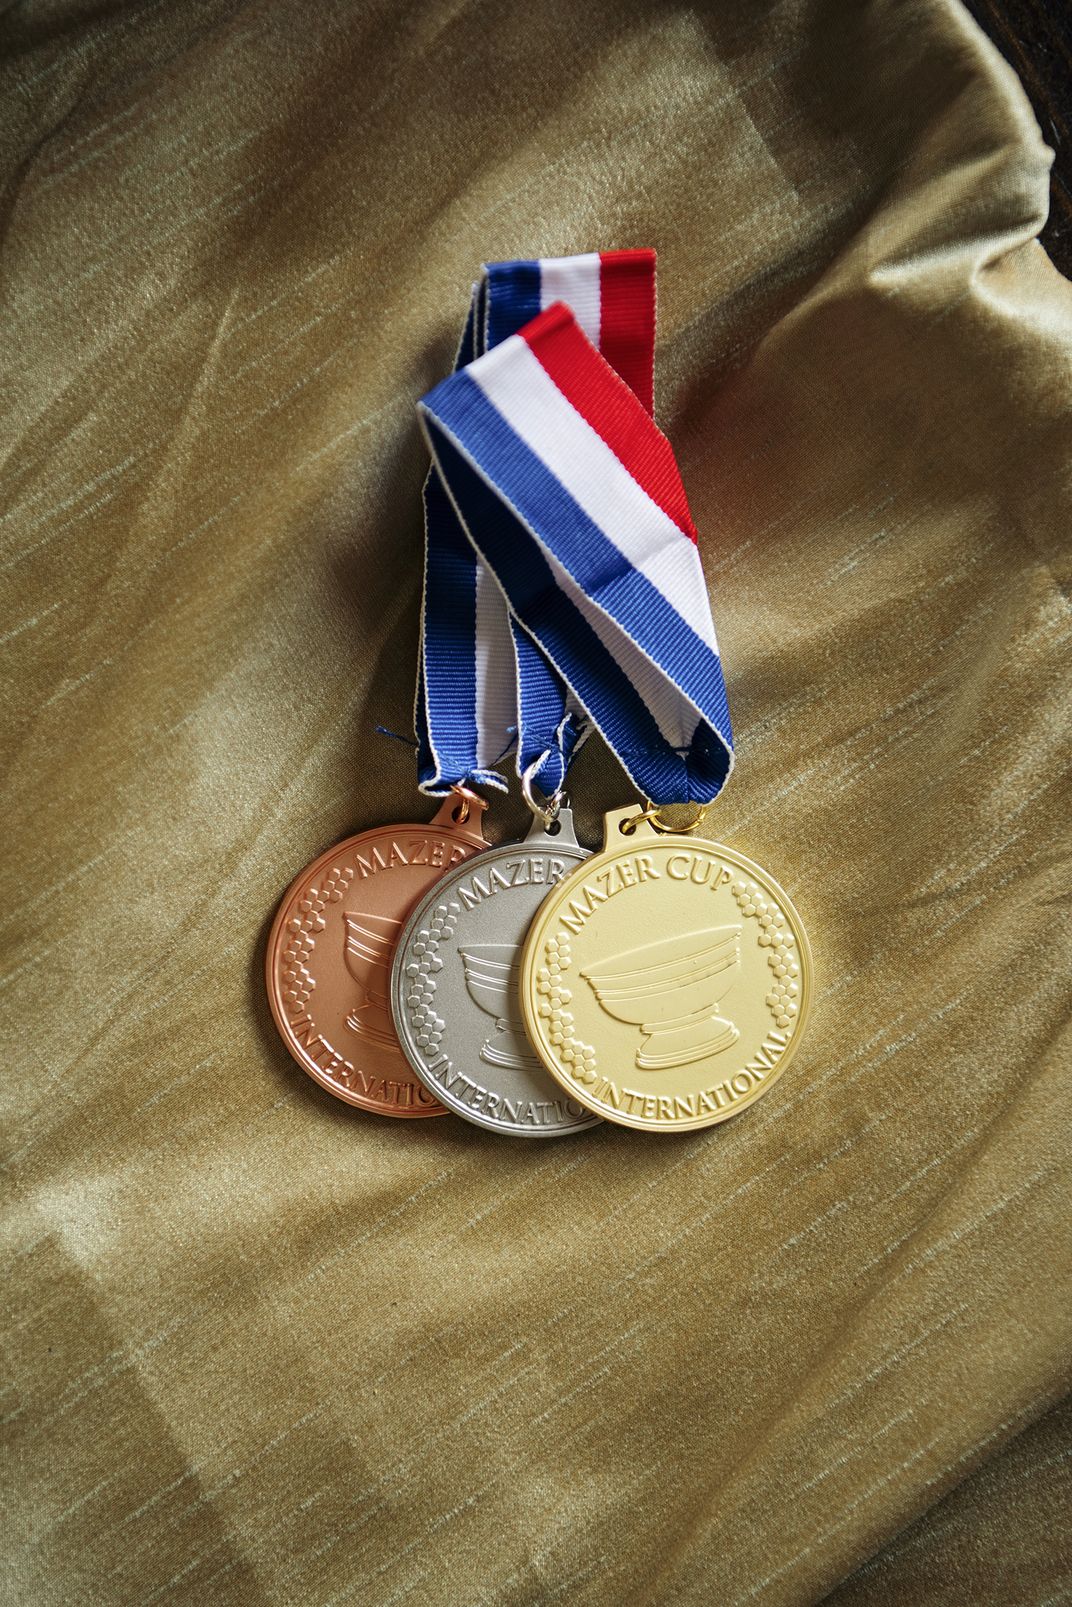 Mazer Cup medals